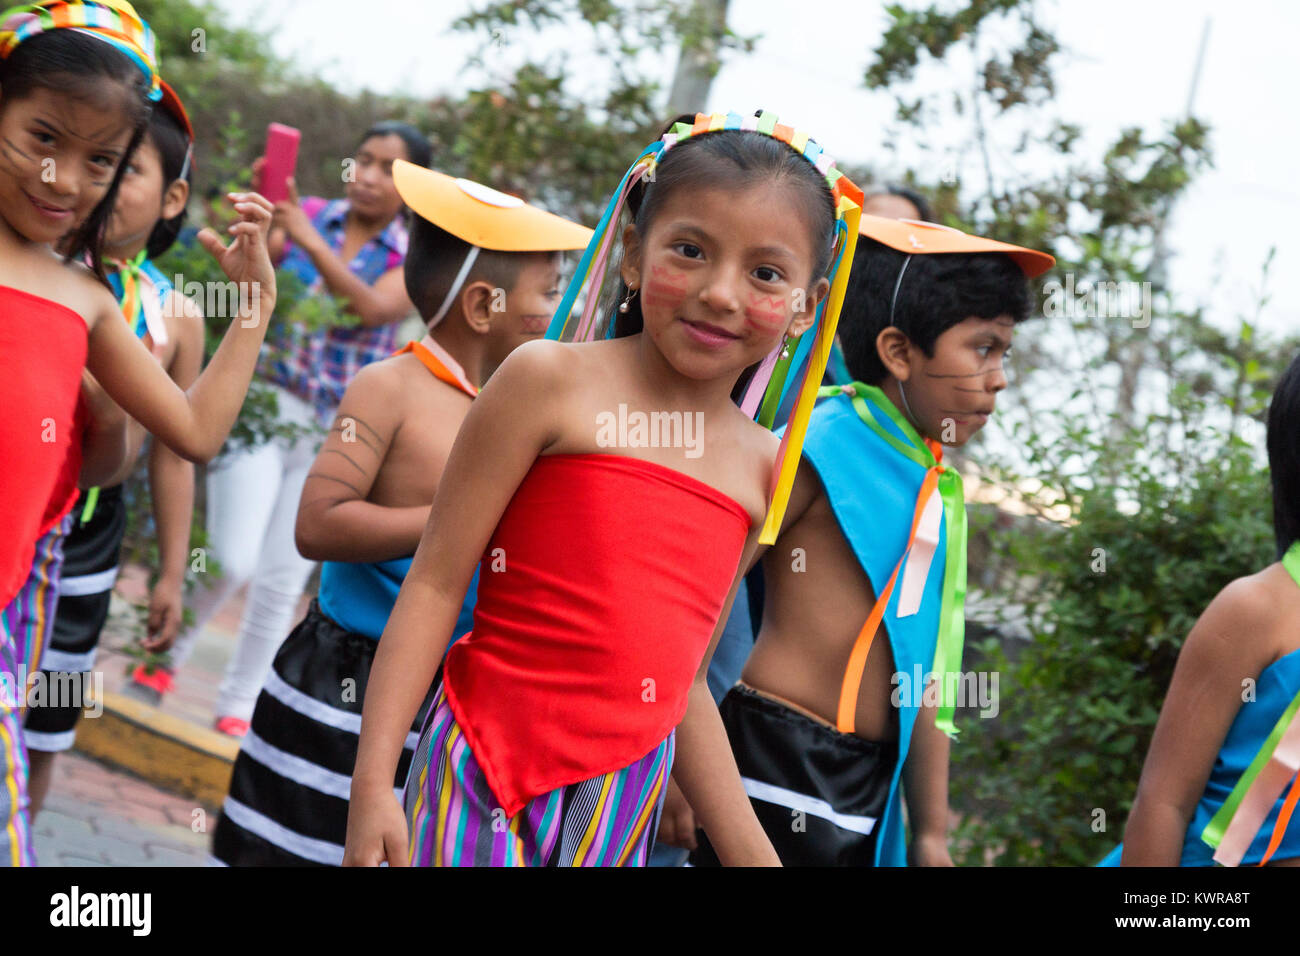 Street child; Local Galapagos children in a street parade, Puerto Ayora, Santa Cruz island, galapagos Islands, Ecuador South America Stock Photo